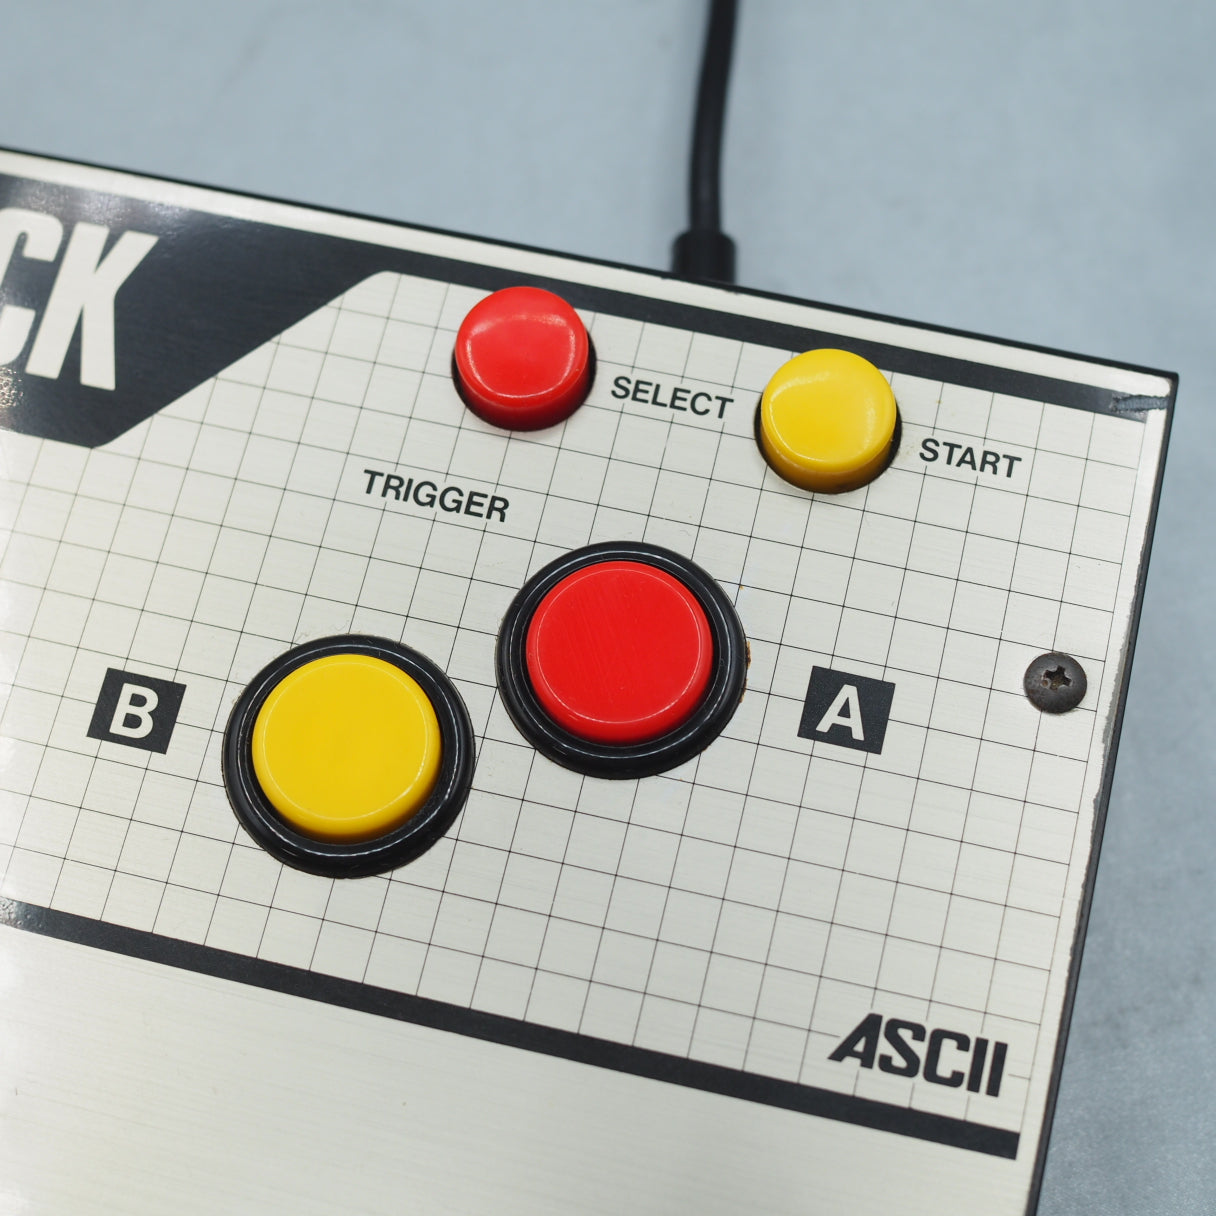 ASCII STICK Controller AS-2088-FC